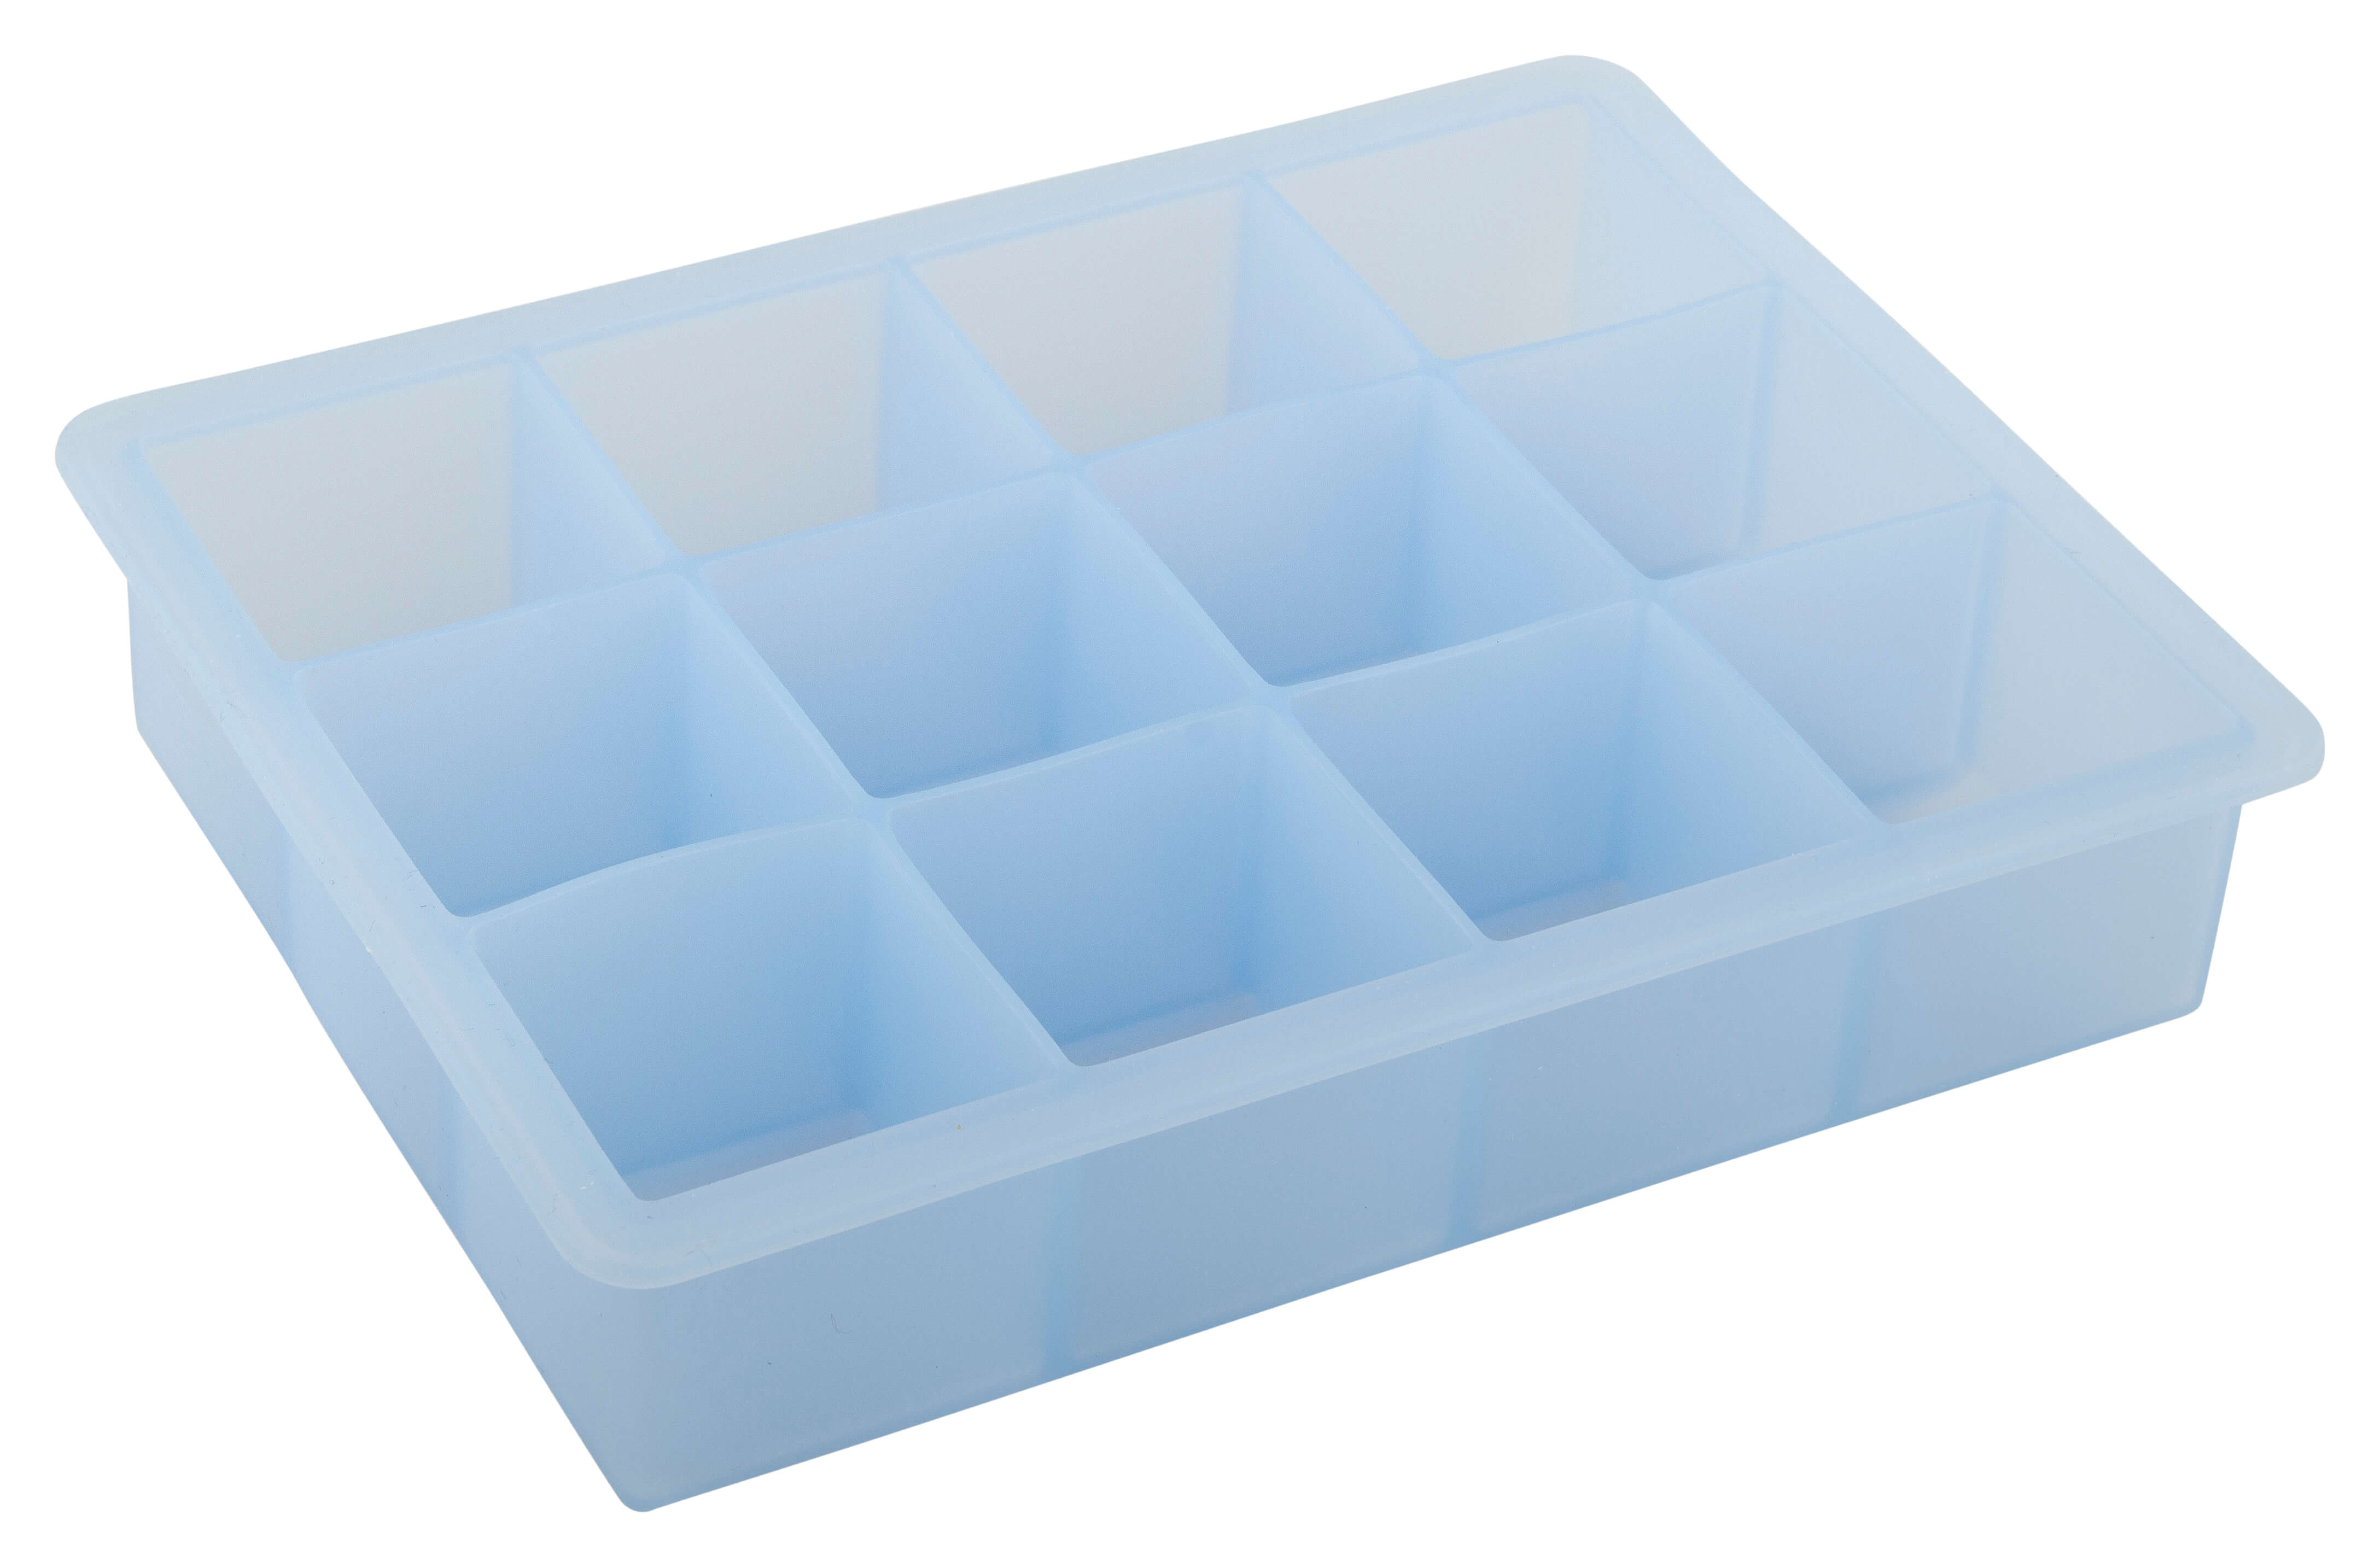 Ice former Cubes, 12 cubes, Lurch - platinum-silicone (4cm)